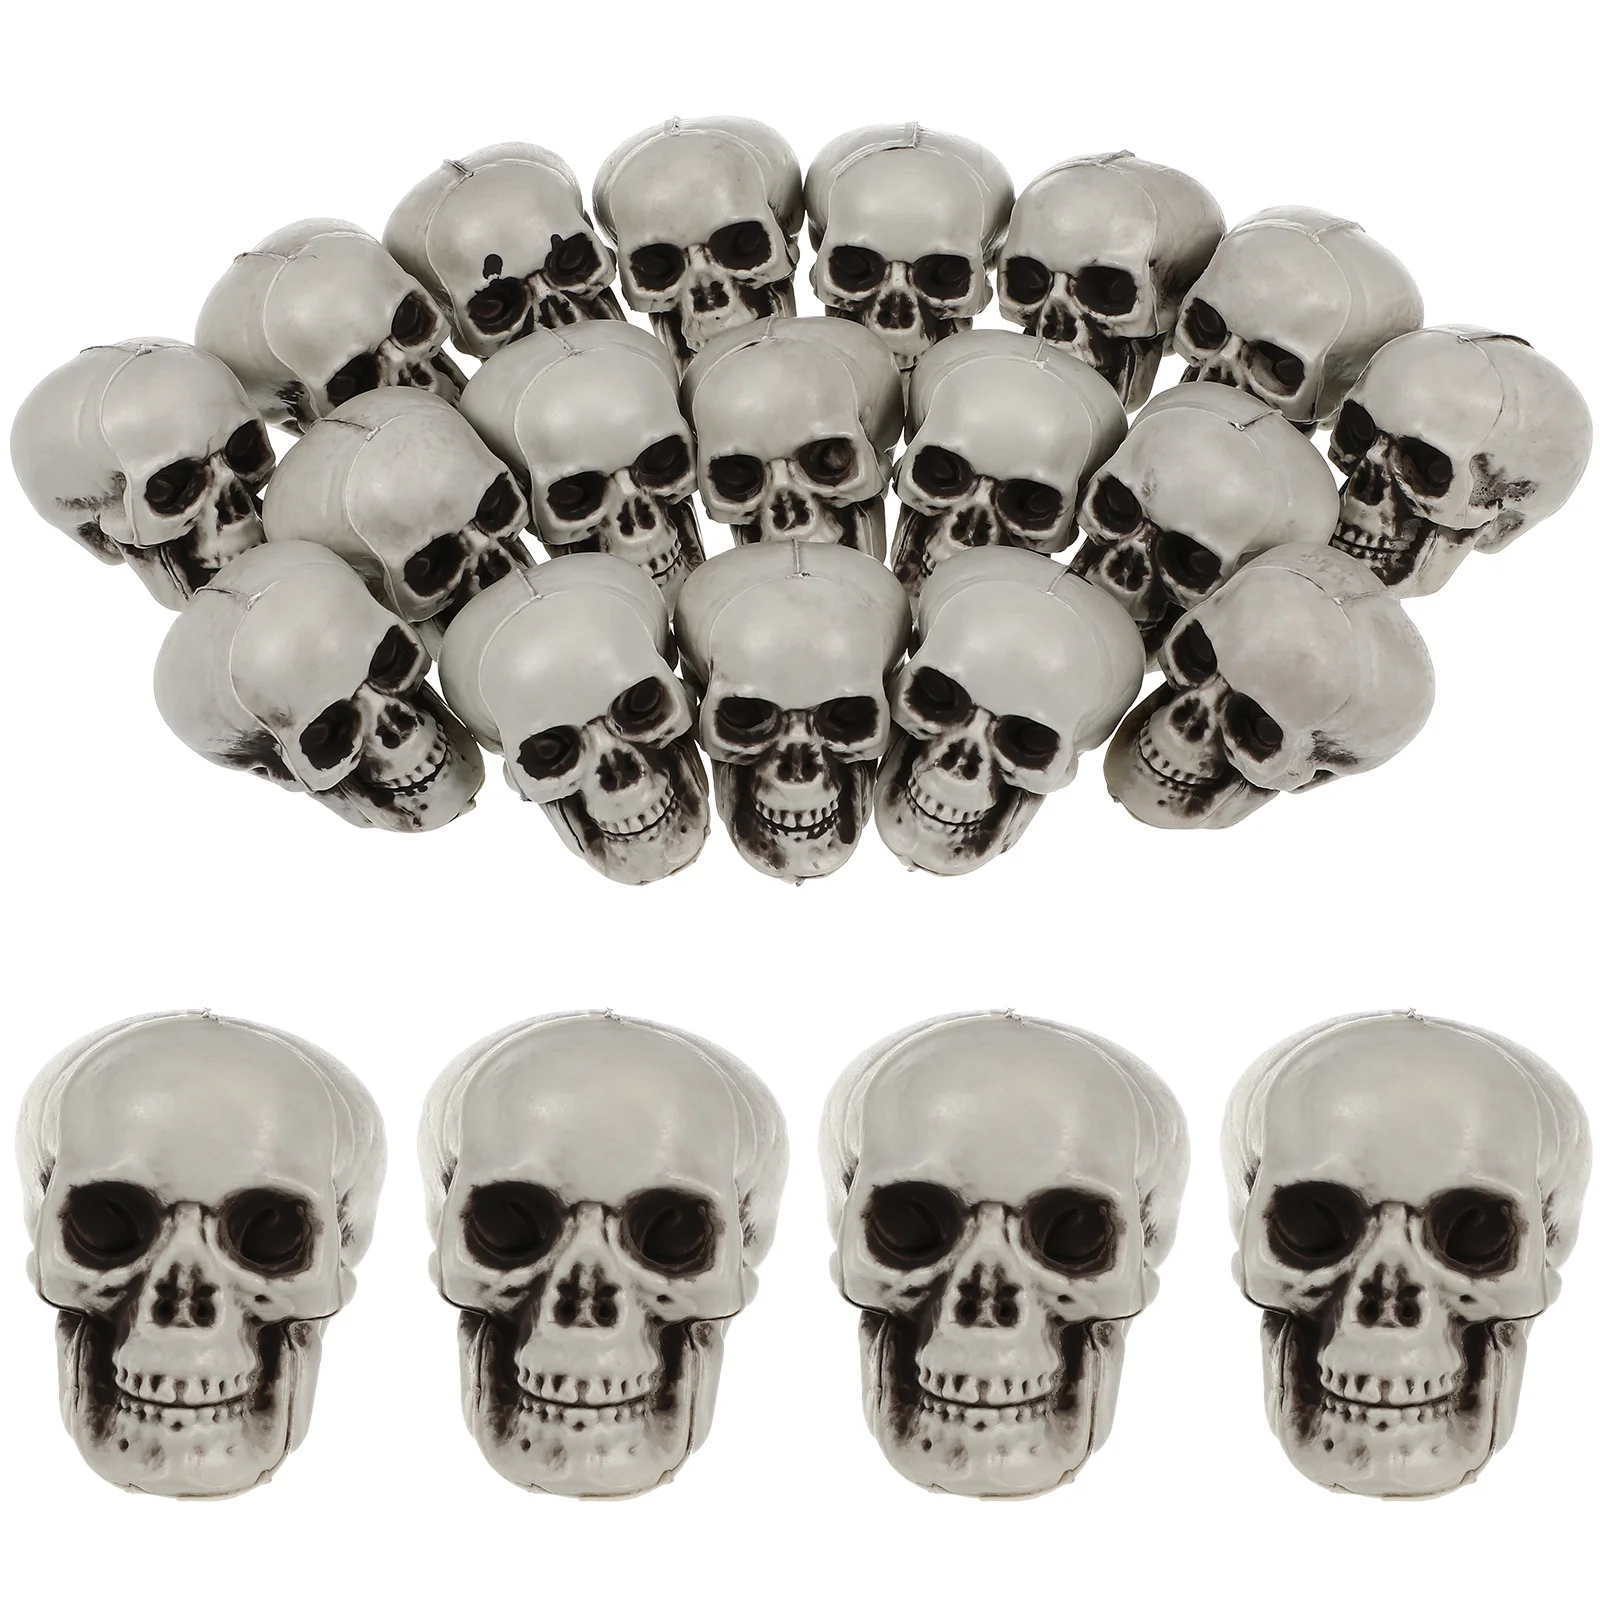 

18pcs Tiny Skulls Props Terrifying Decor for DIY Decor Haunted House Roombreak Party Decoration Halloween liquidation